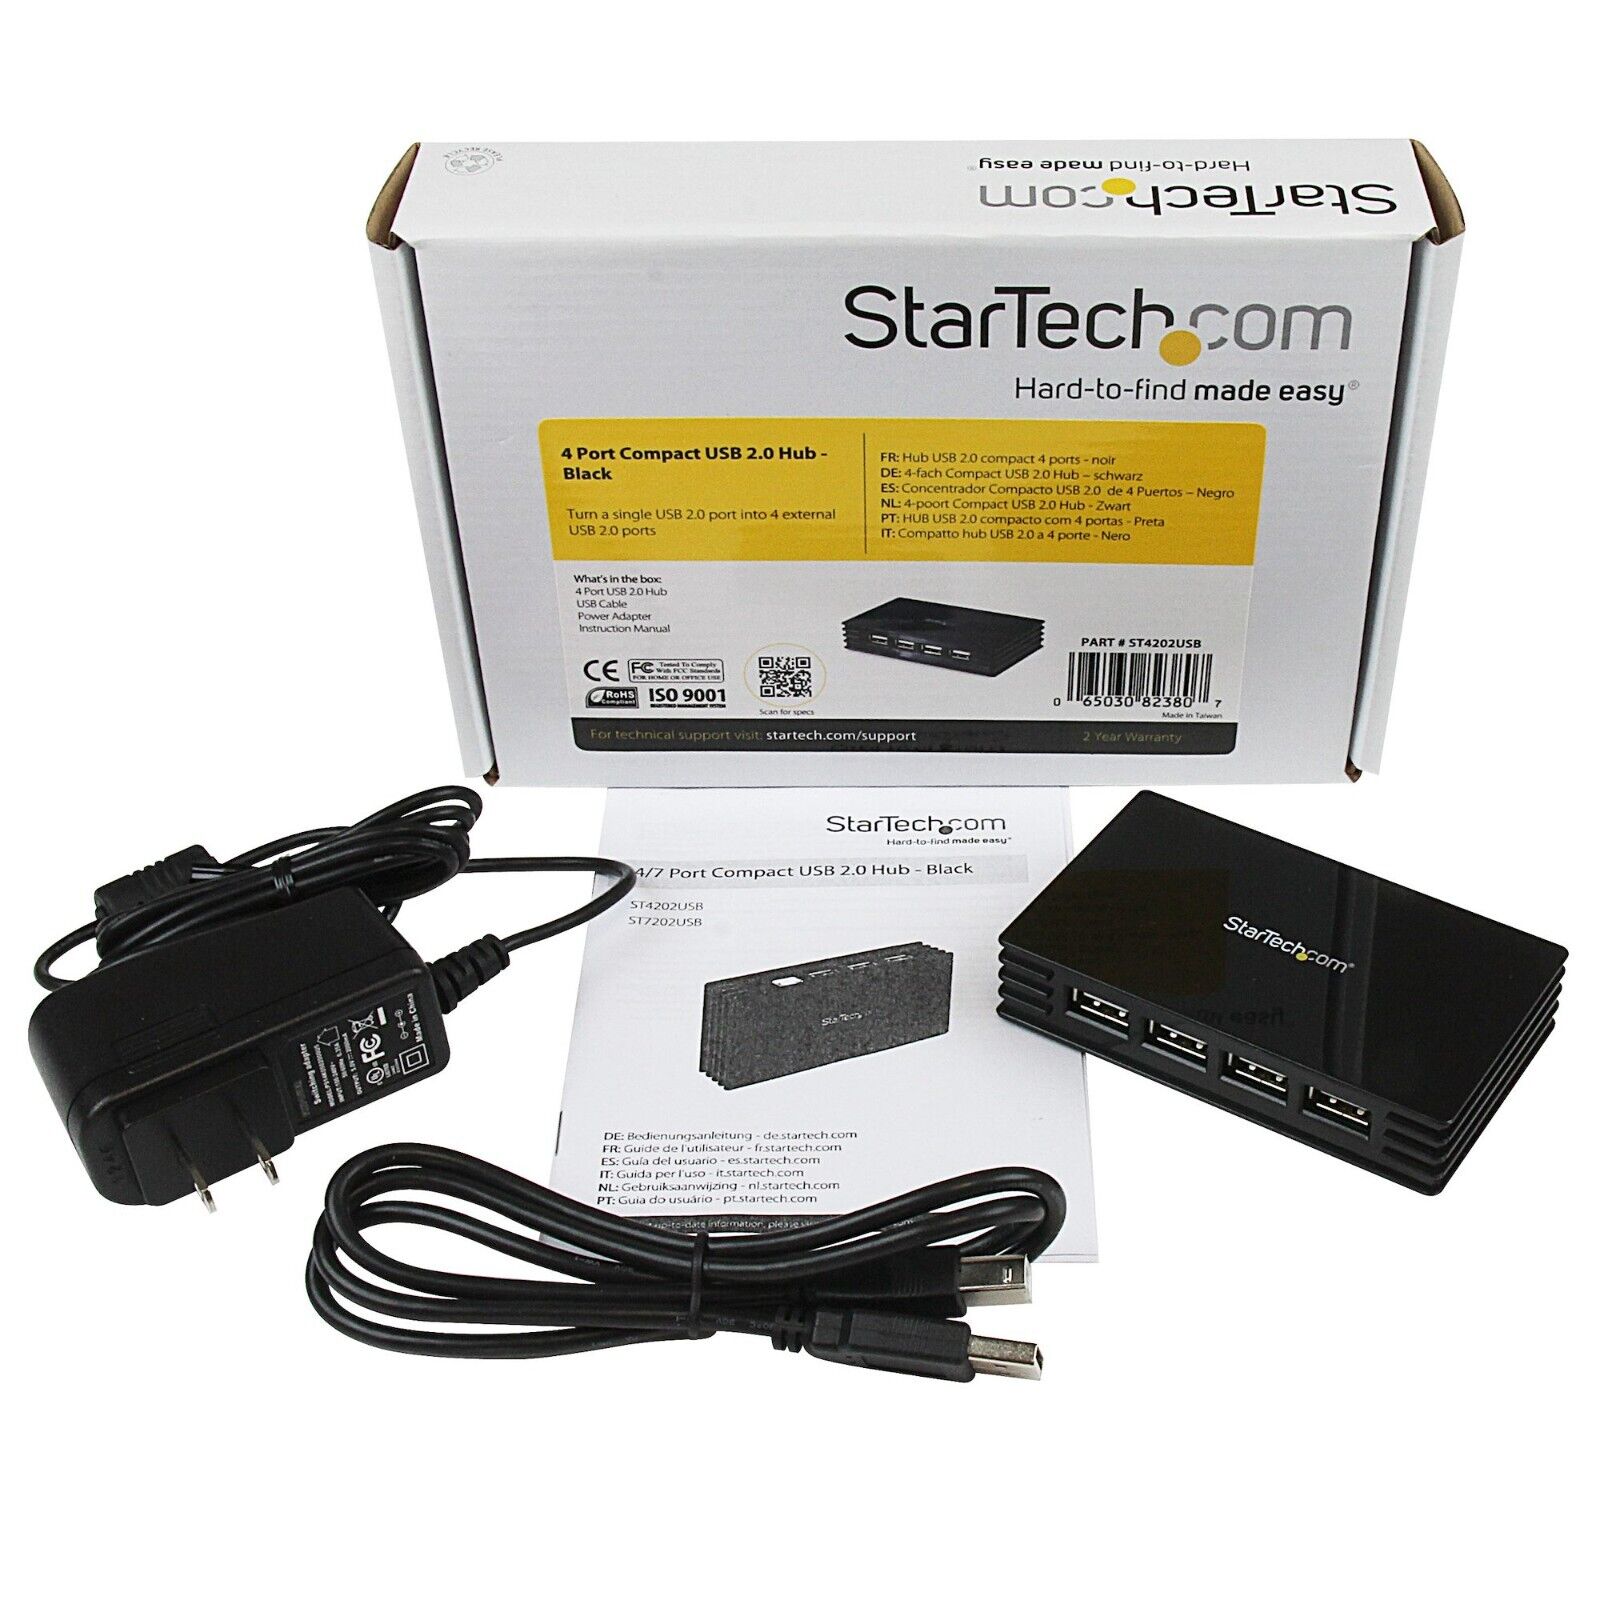 StarTech.com 4 Port Compact USB 2.0 Hub ST4202USB